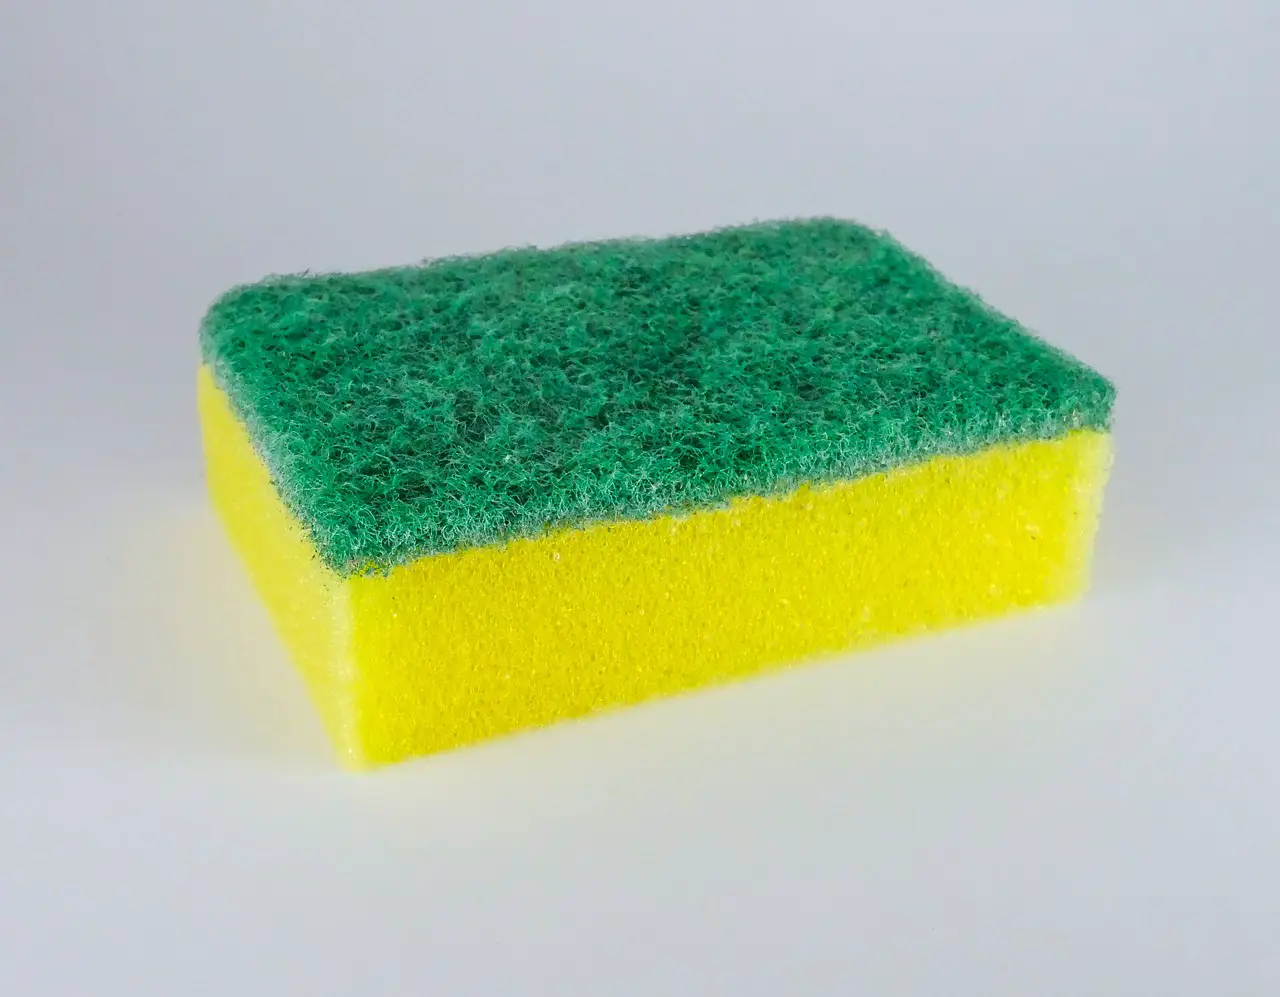 Are Sponges Toxic?